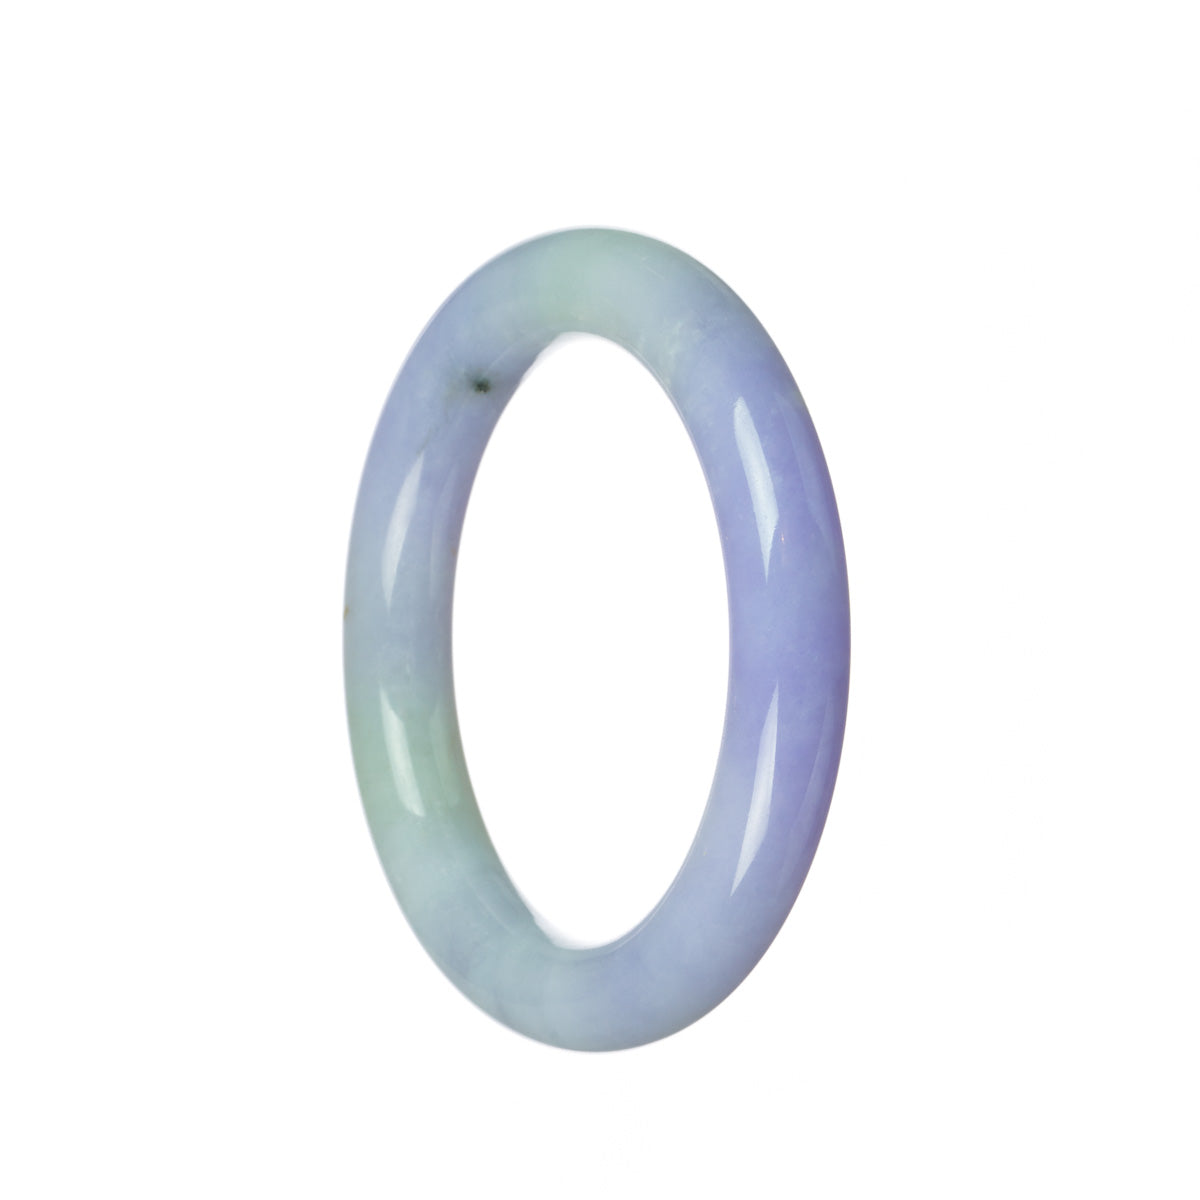 A round lavender Burmese jade bangle bracelet, Grade A quality, measuring 57mm in diameter. Sold by MAYS GEMS.